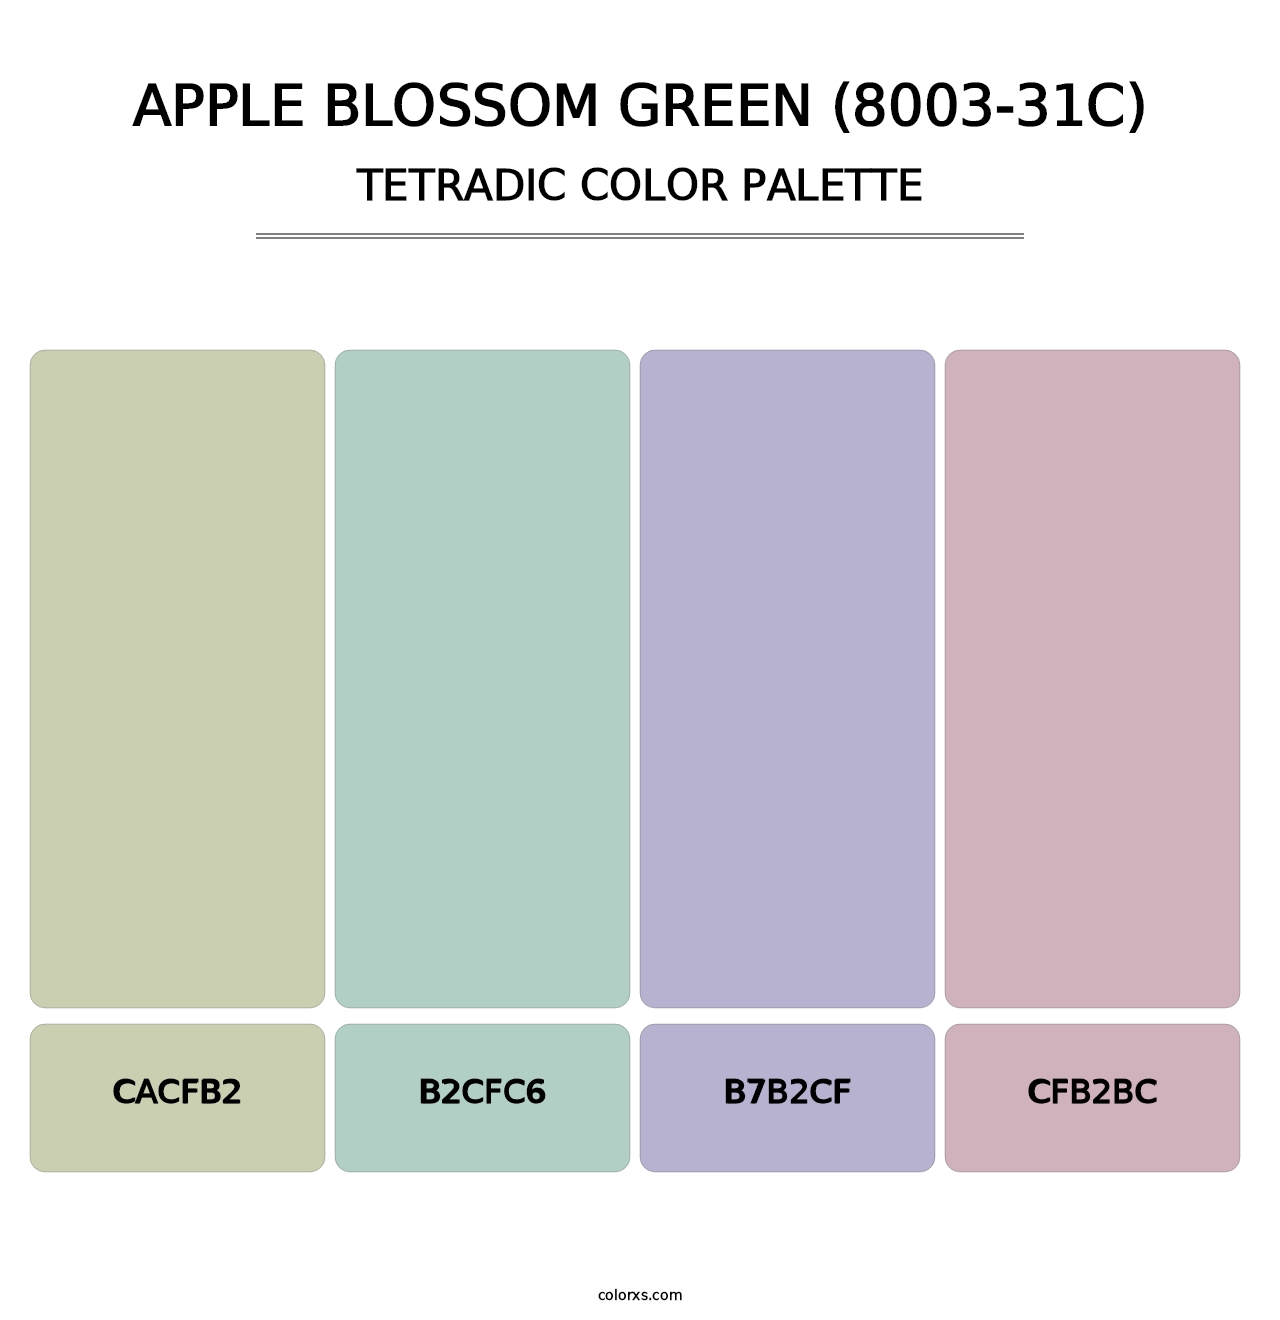 Apple Blossom Green (8003-31C) - Tetradic Color Palette